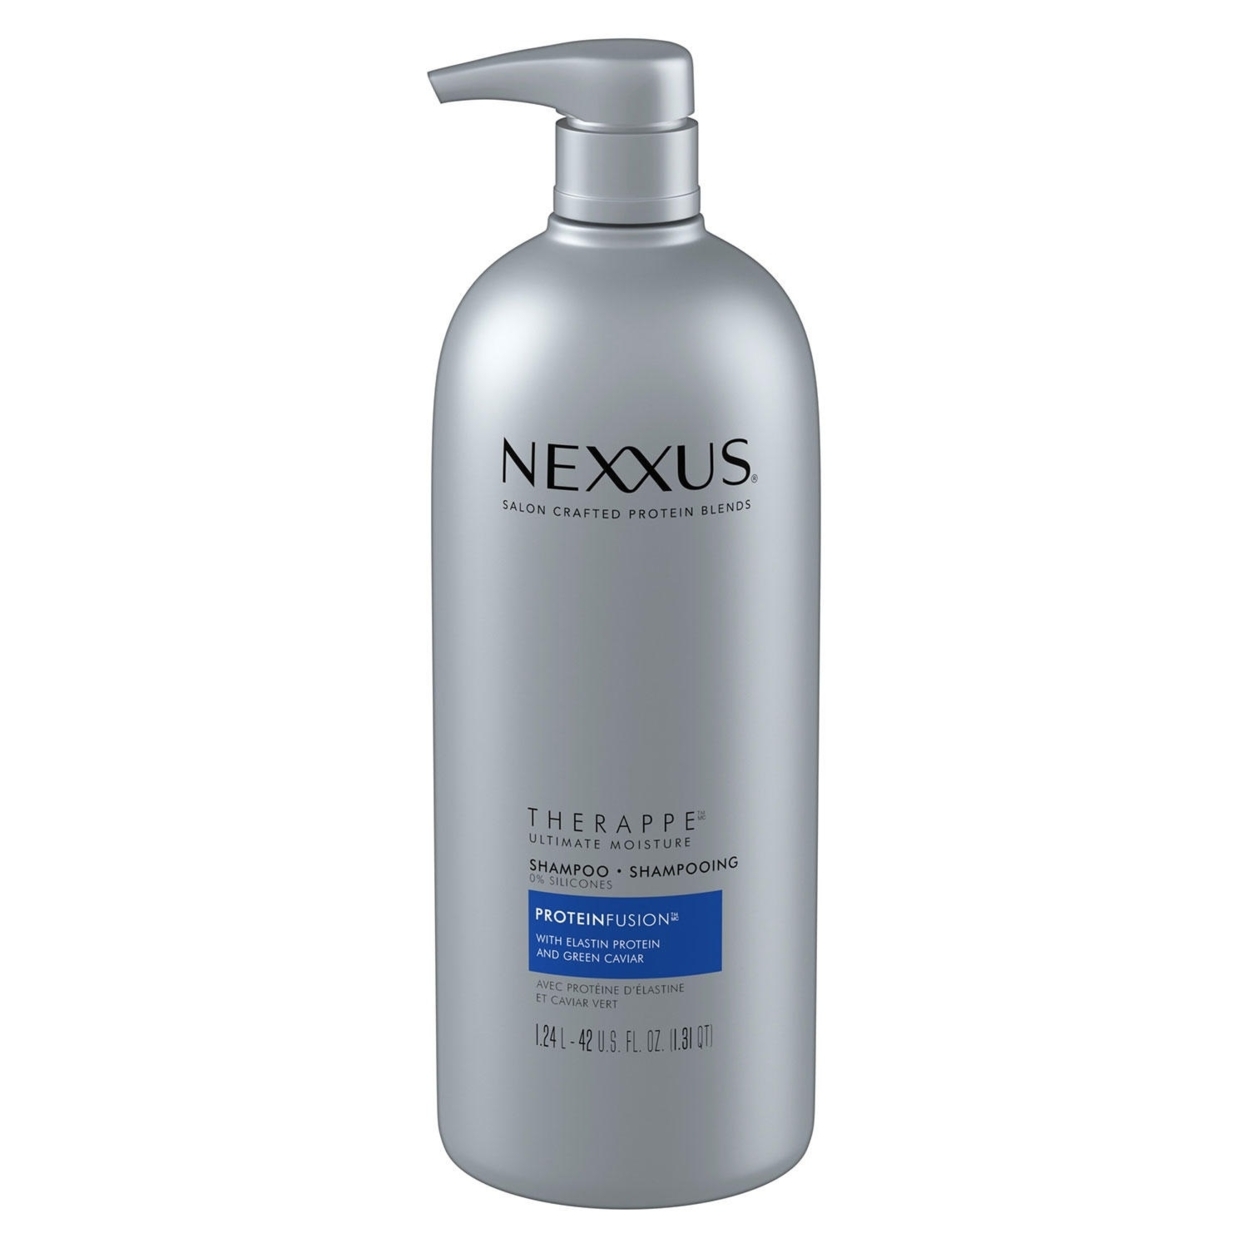 Nexxus Therappe Ultimate Moisturizing Shampoo (42 Fluid Ounce)